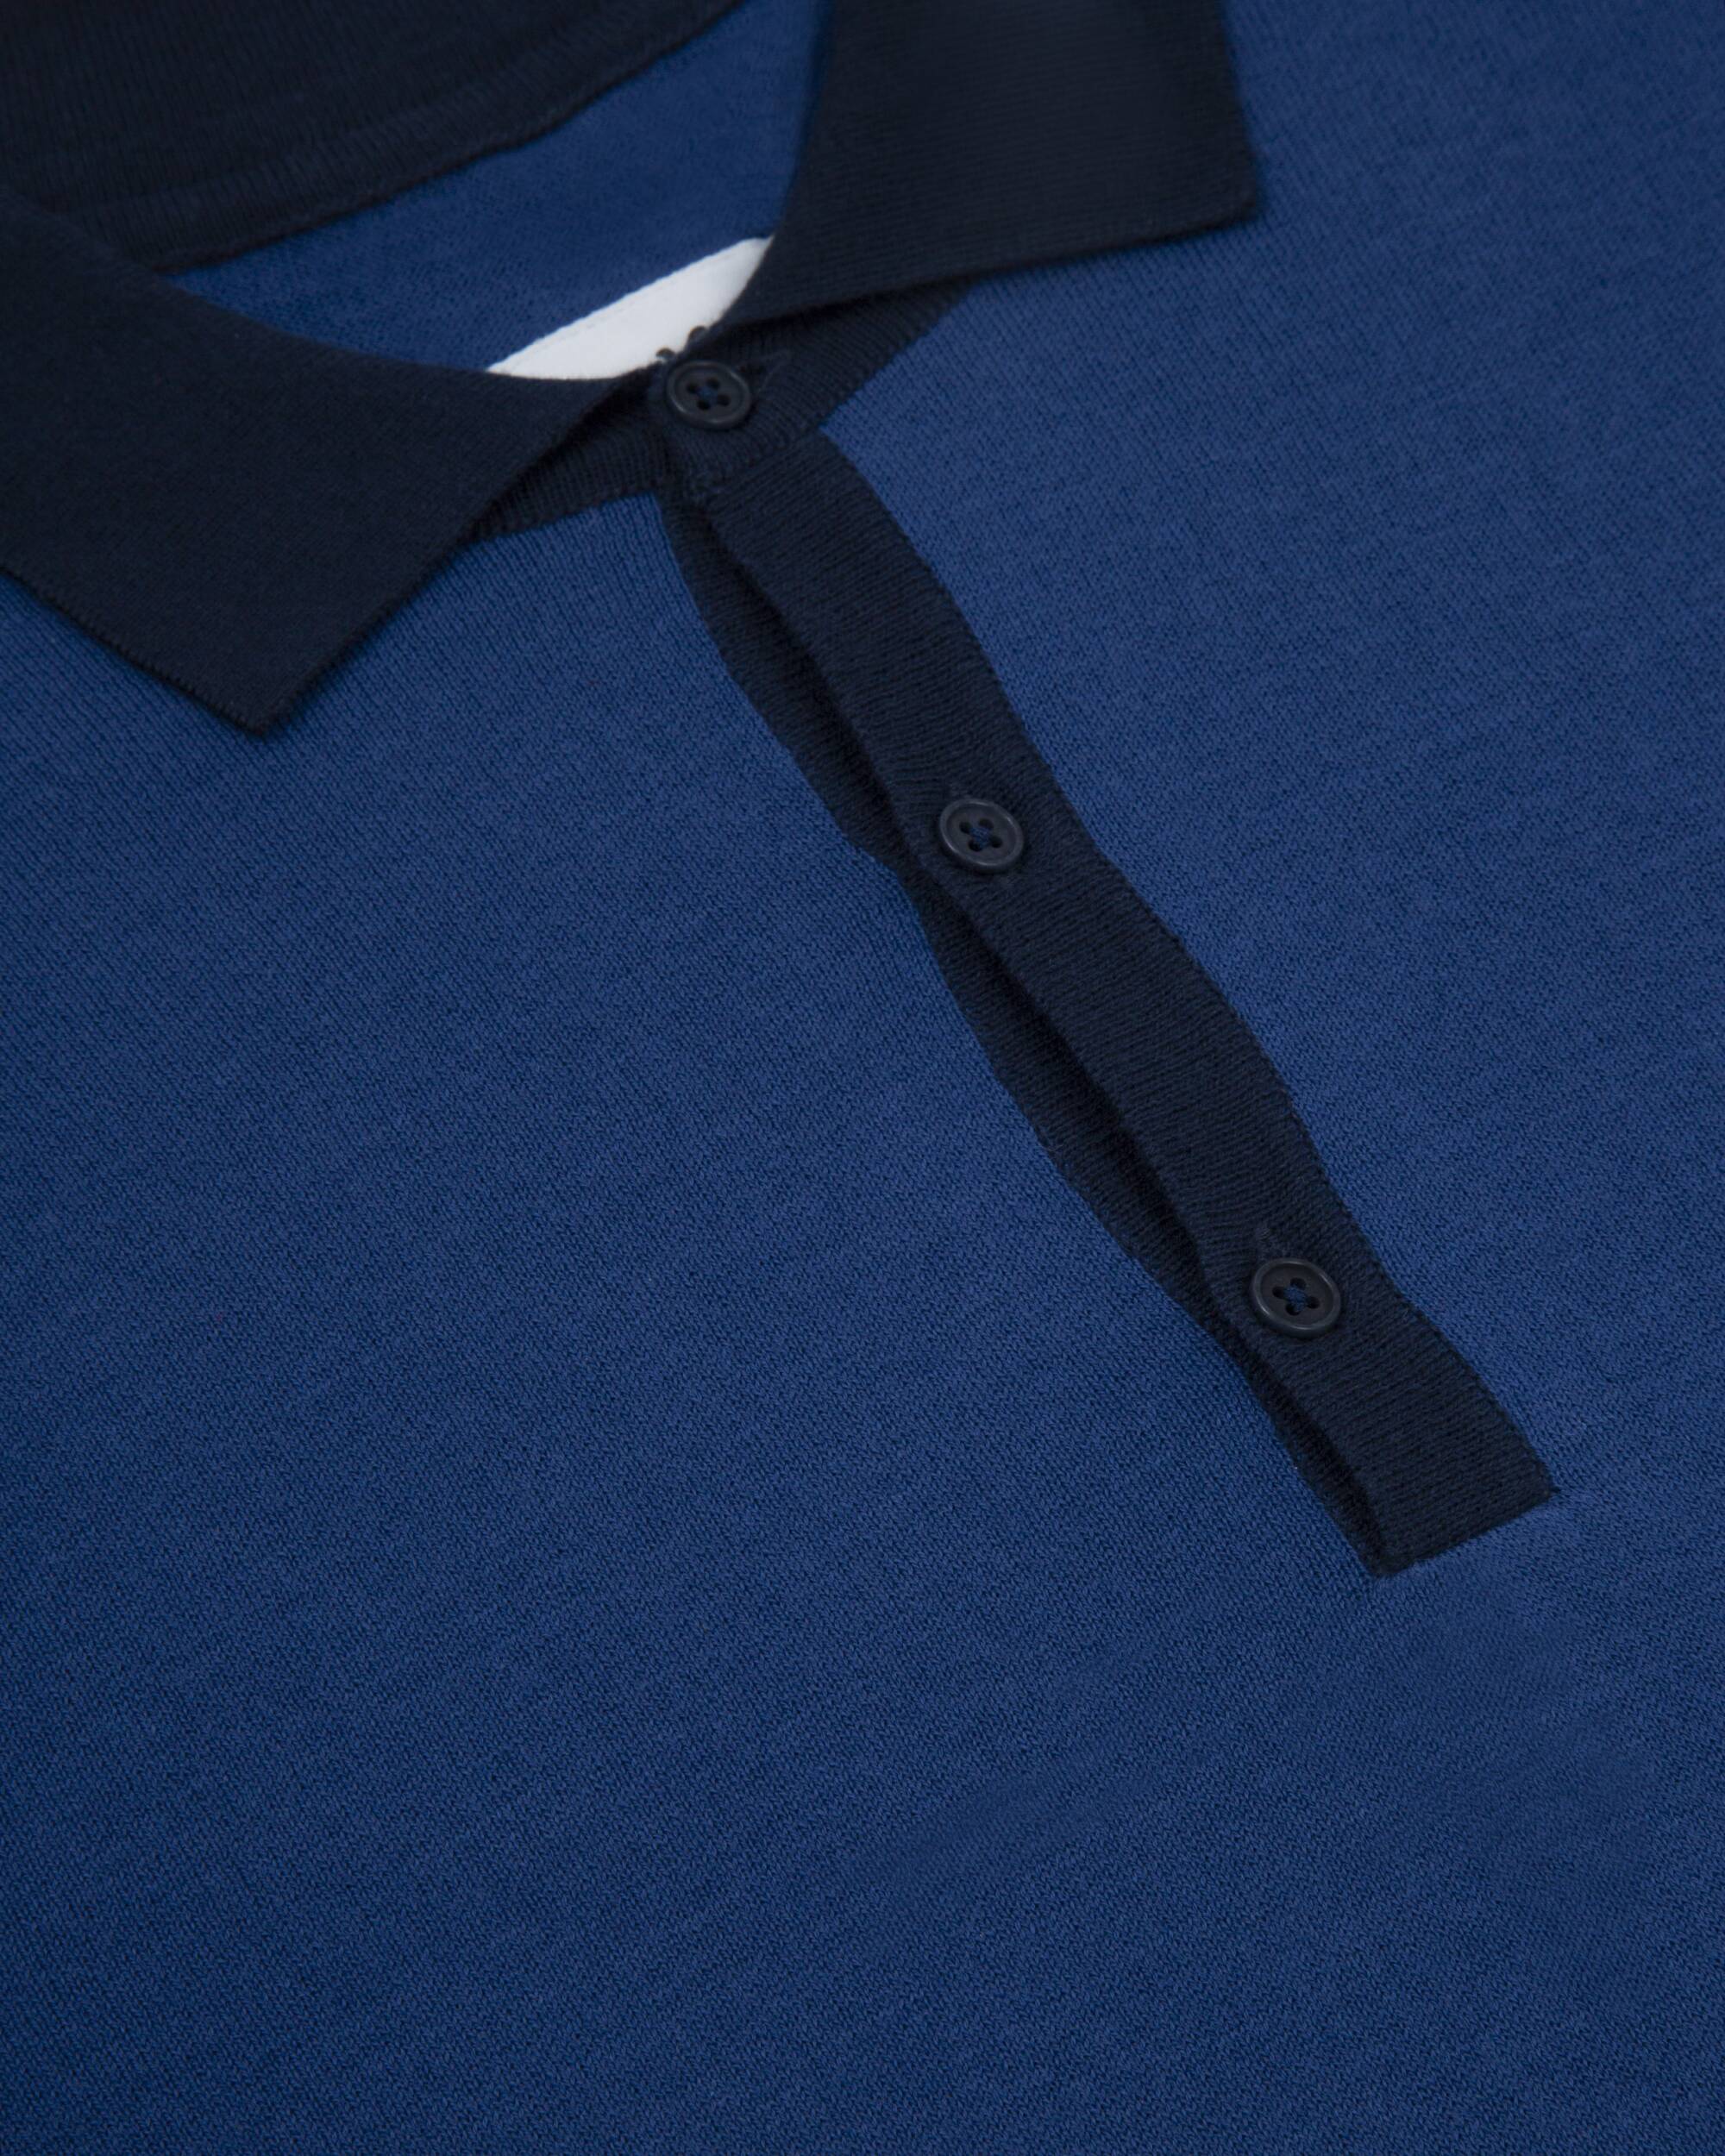 Polo bleu et noir Navy Sky en coton 100% biologique de Brava Fabrics